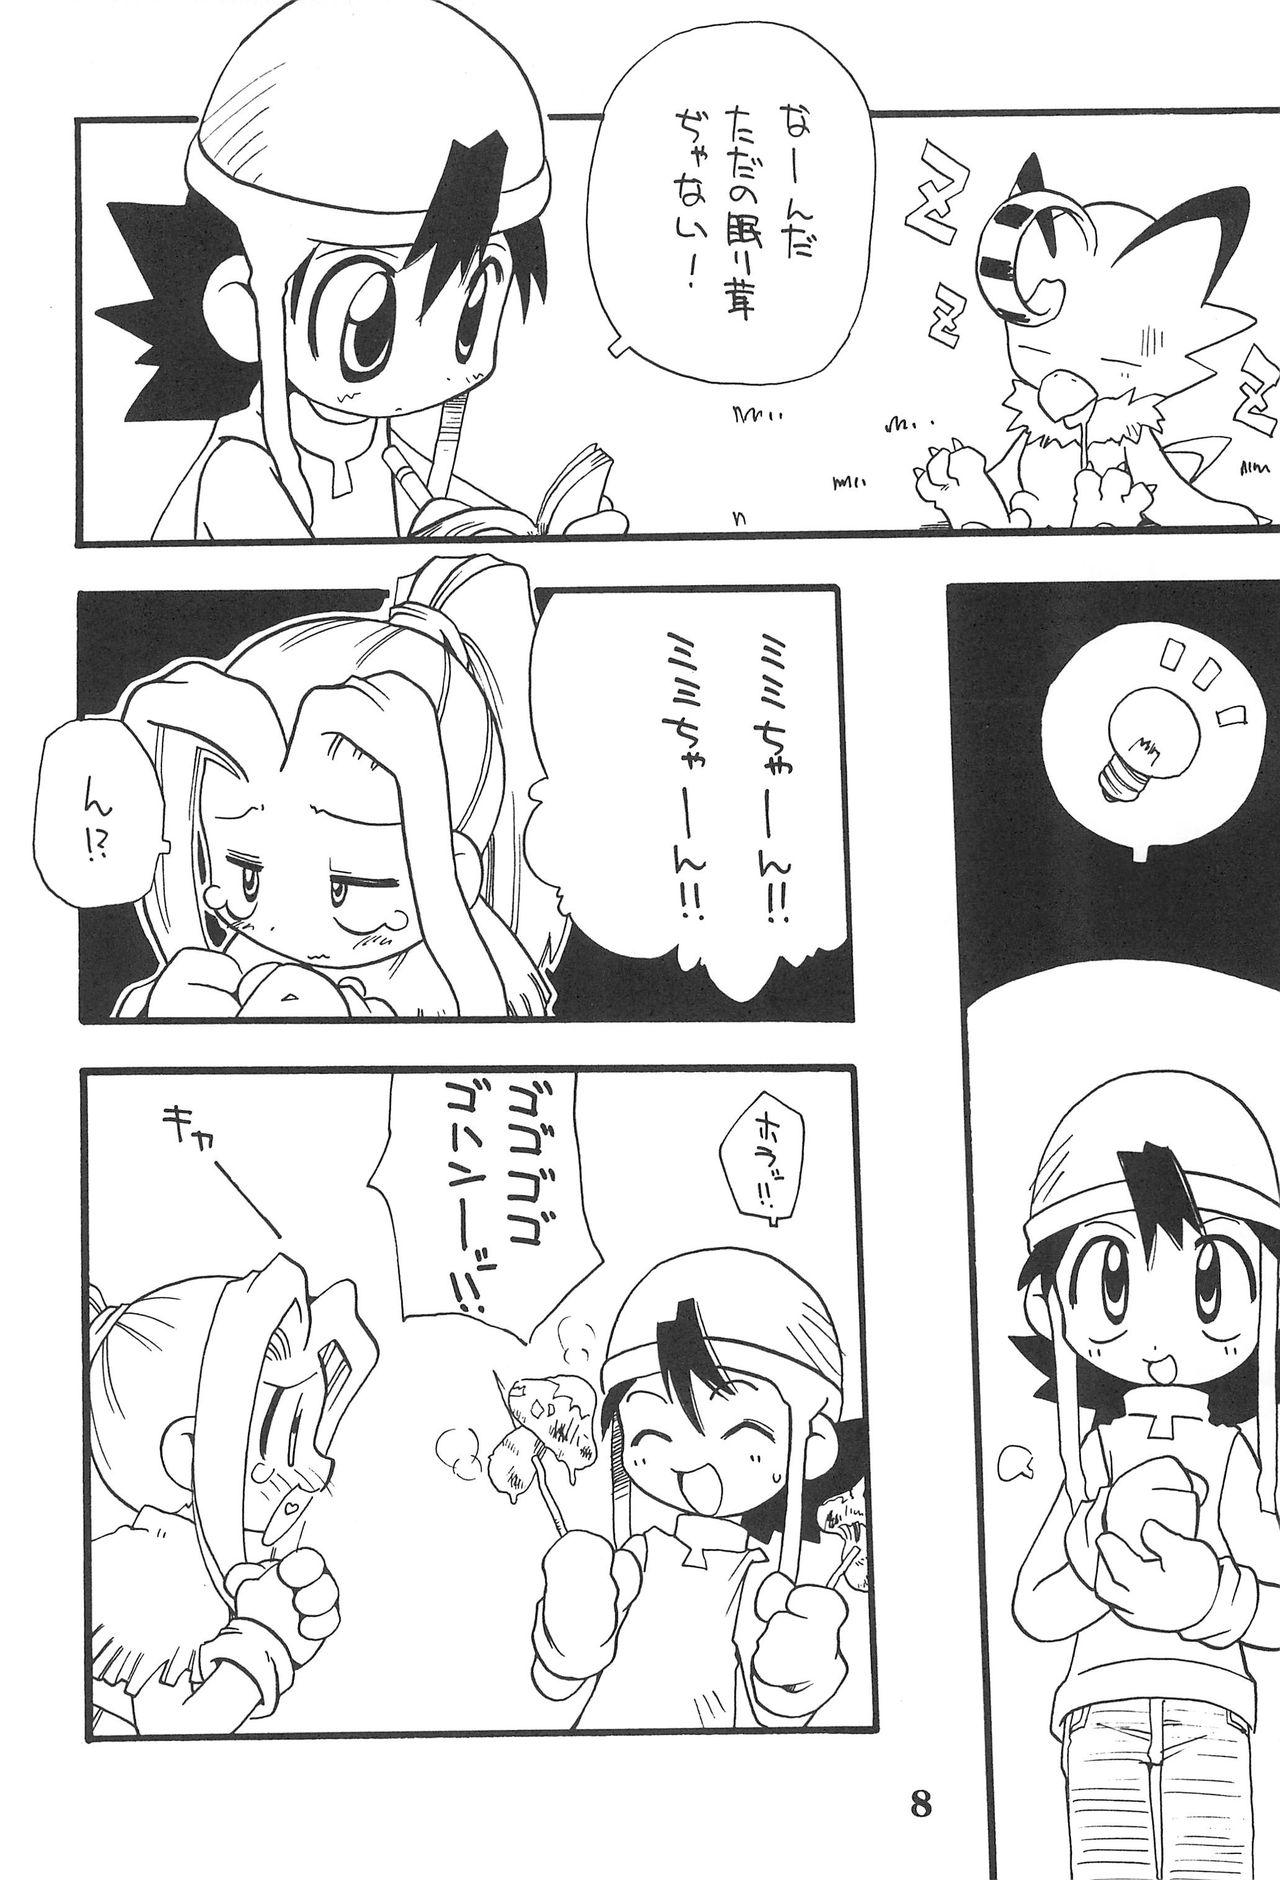 Point Of View K8 KICHIKU BOOK8 COSTOM - Digimon adventure Comendo - Page 8